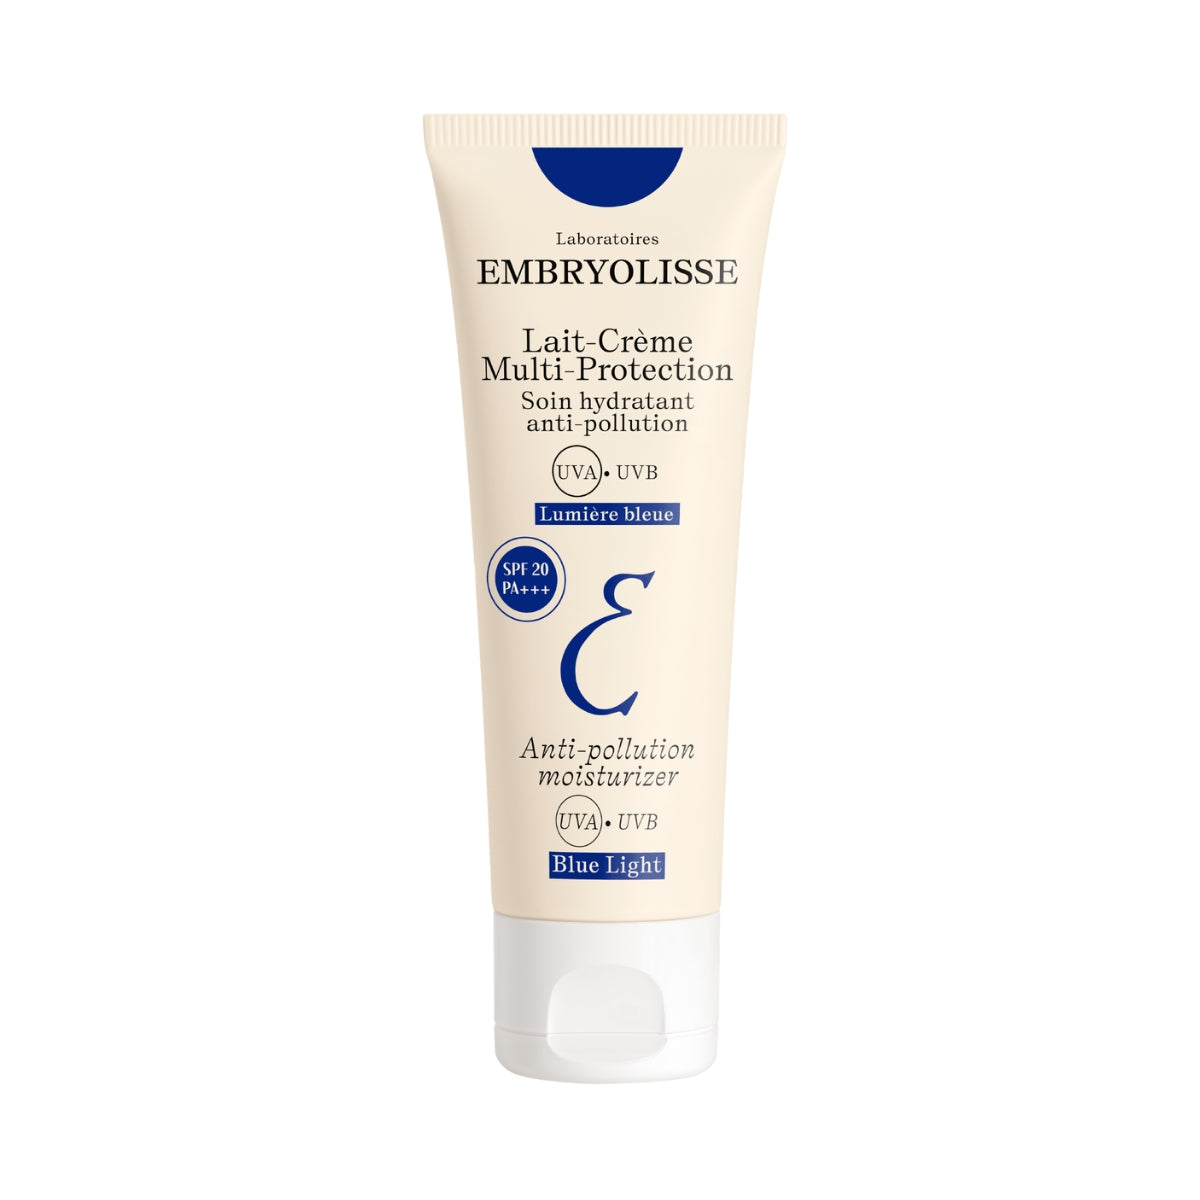 Embryolisse Lait Creme Multi-Protection Moisturising Cream SPF 20